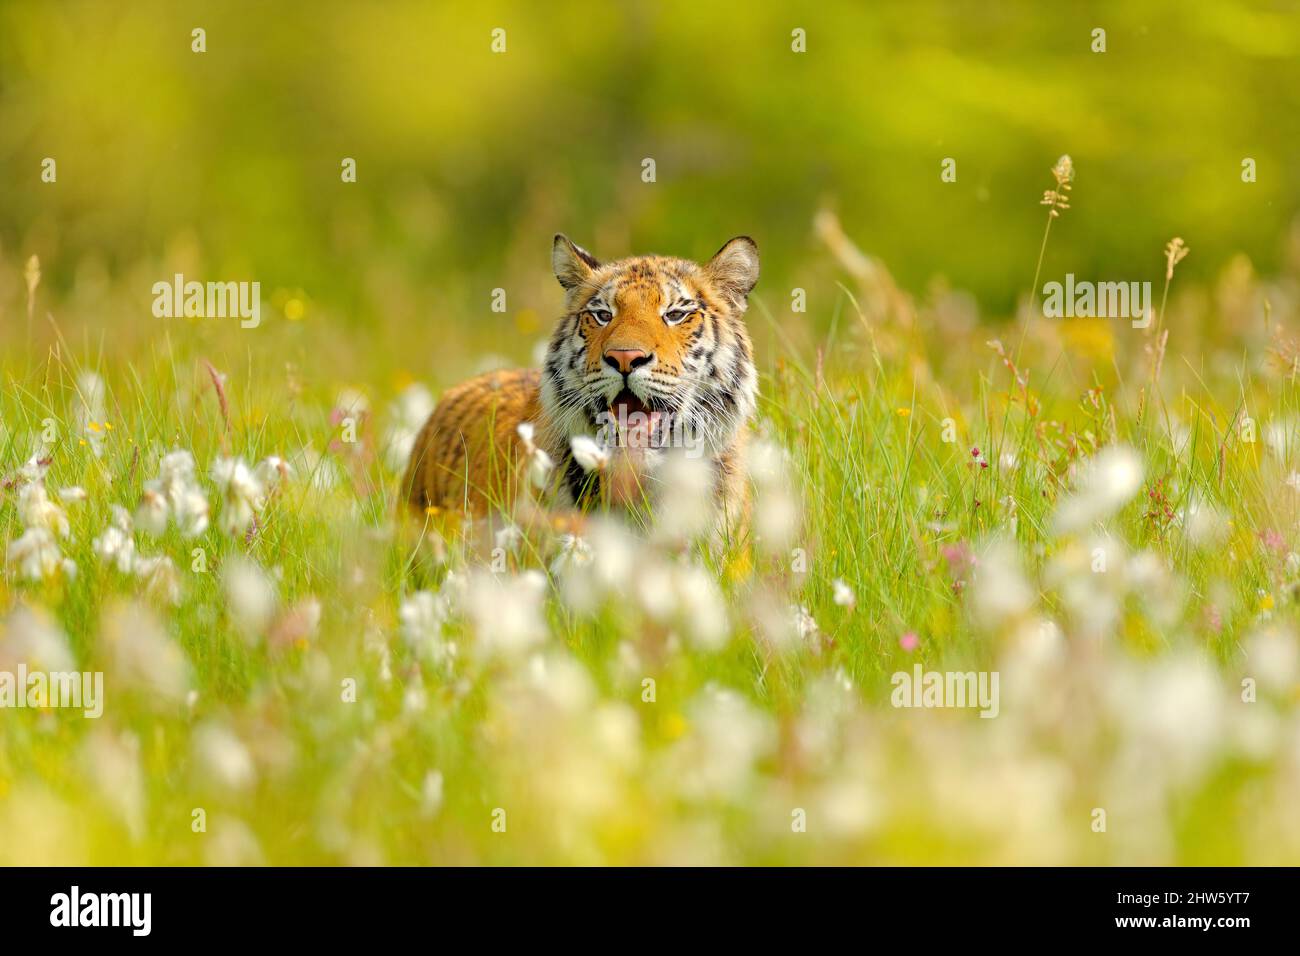 Amur tiger hunting in green white cotton grass. Dangerous animal